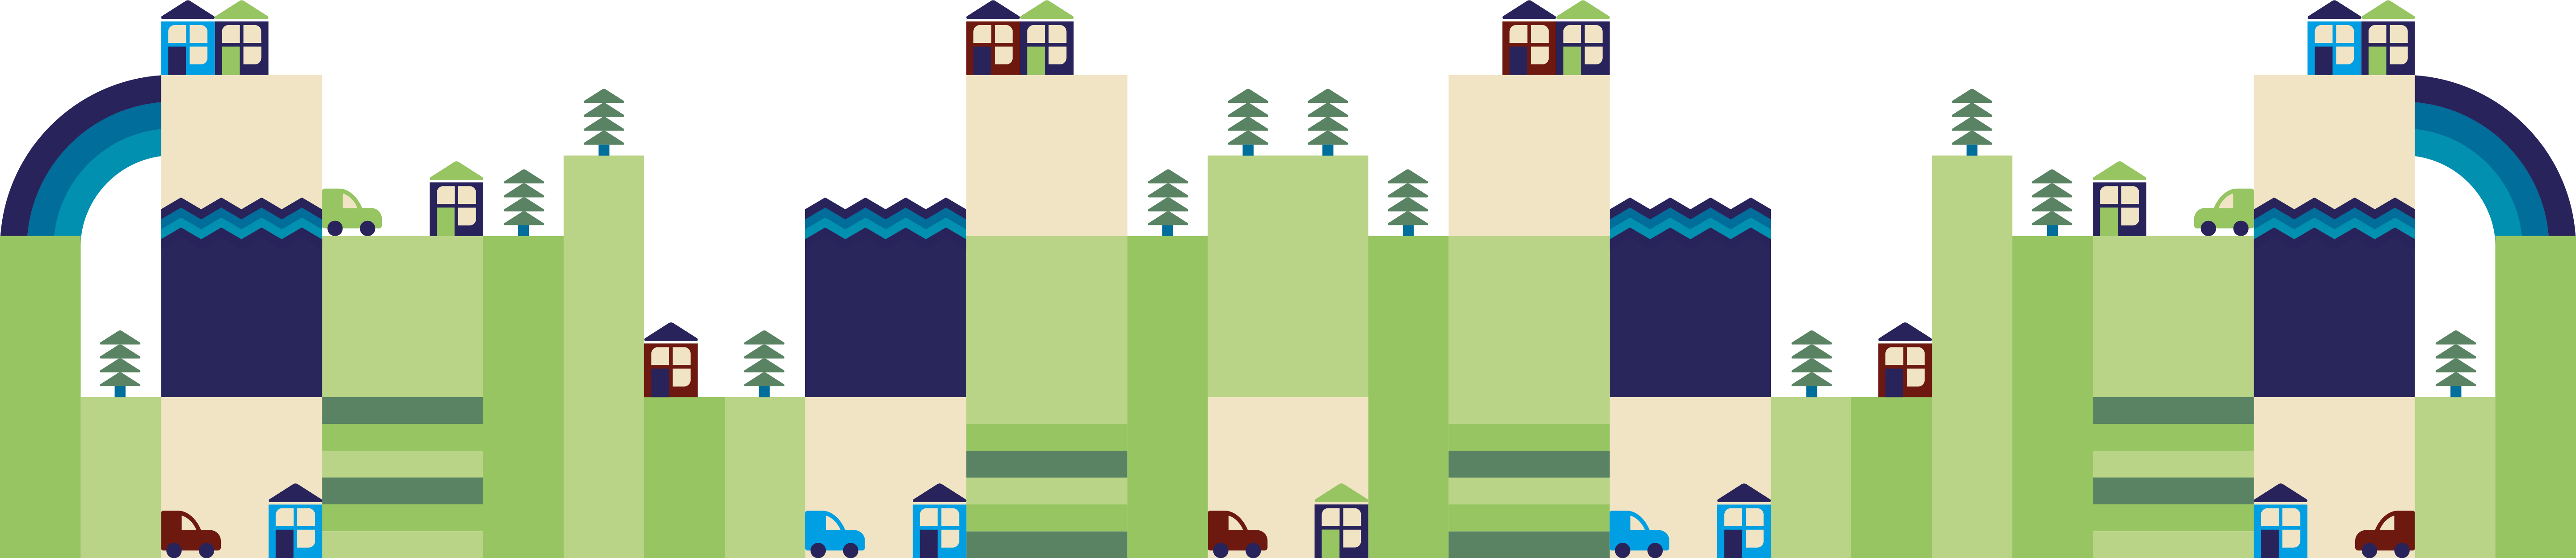 Housing illustration